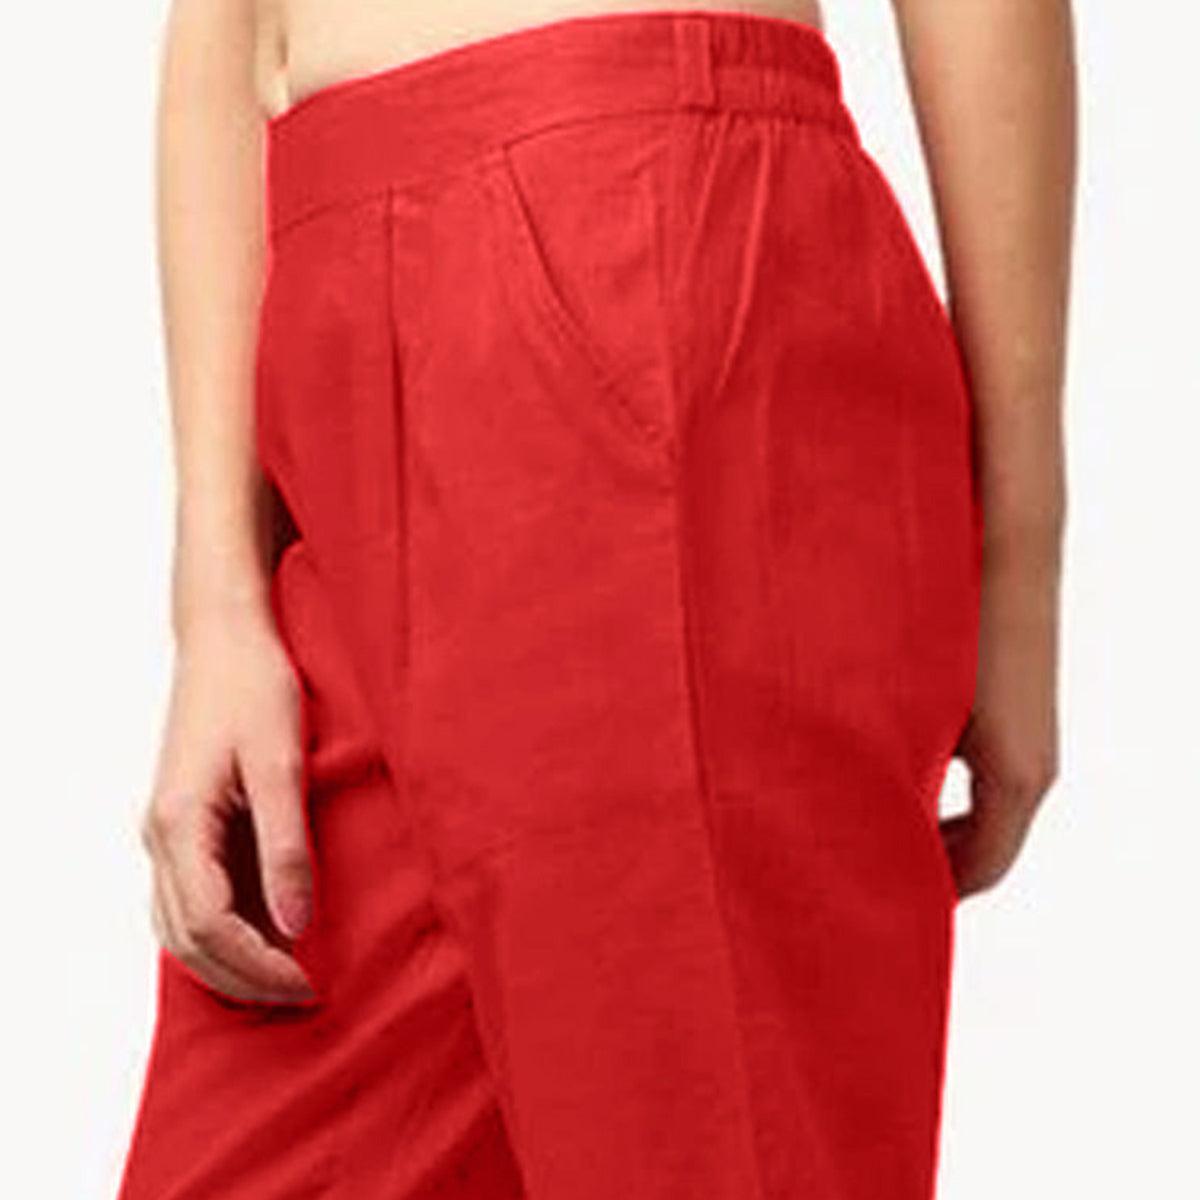 Impressive Red Colored Casual Wear Cotton Pant - Peachmode